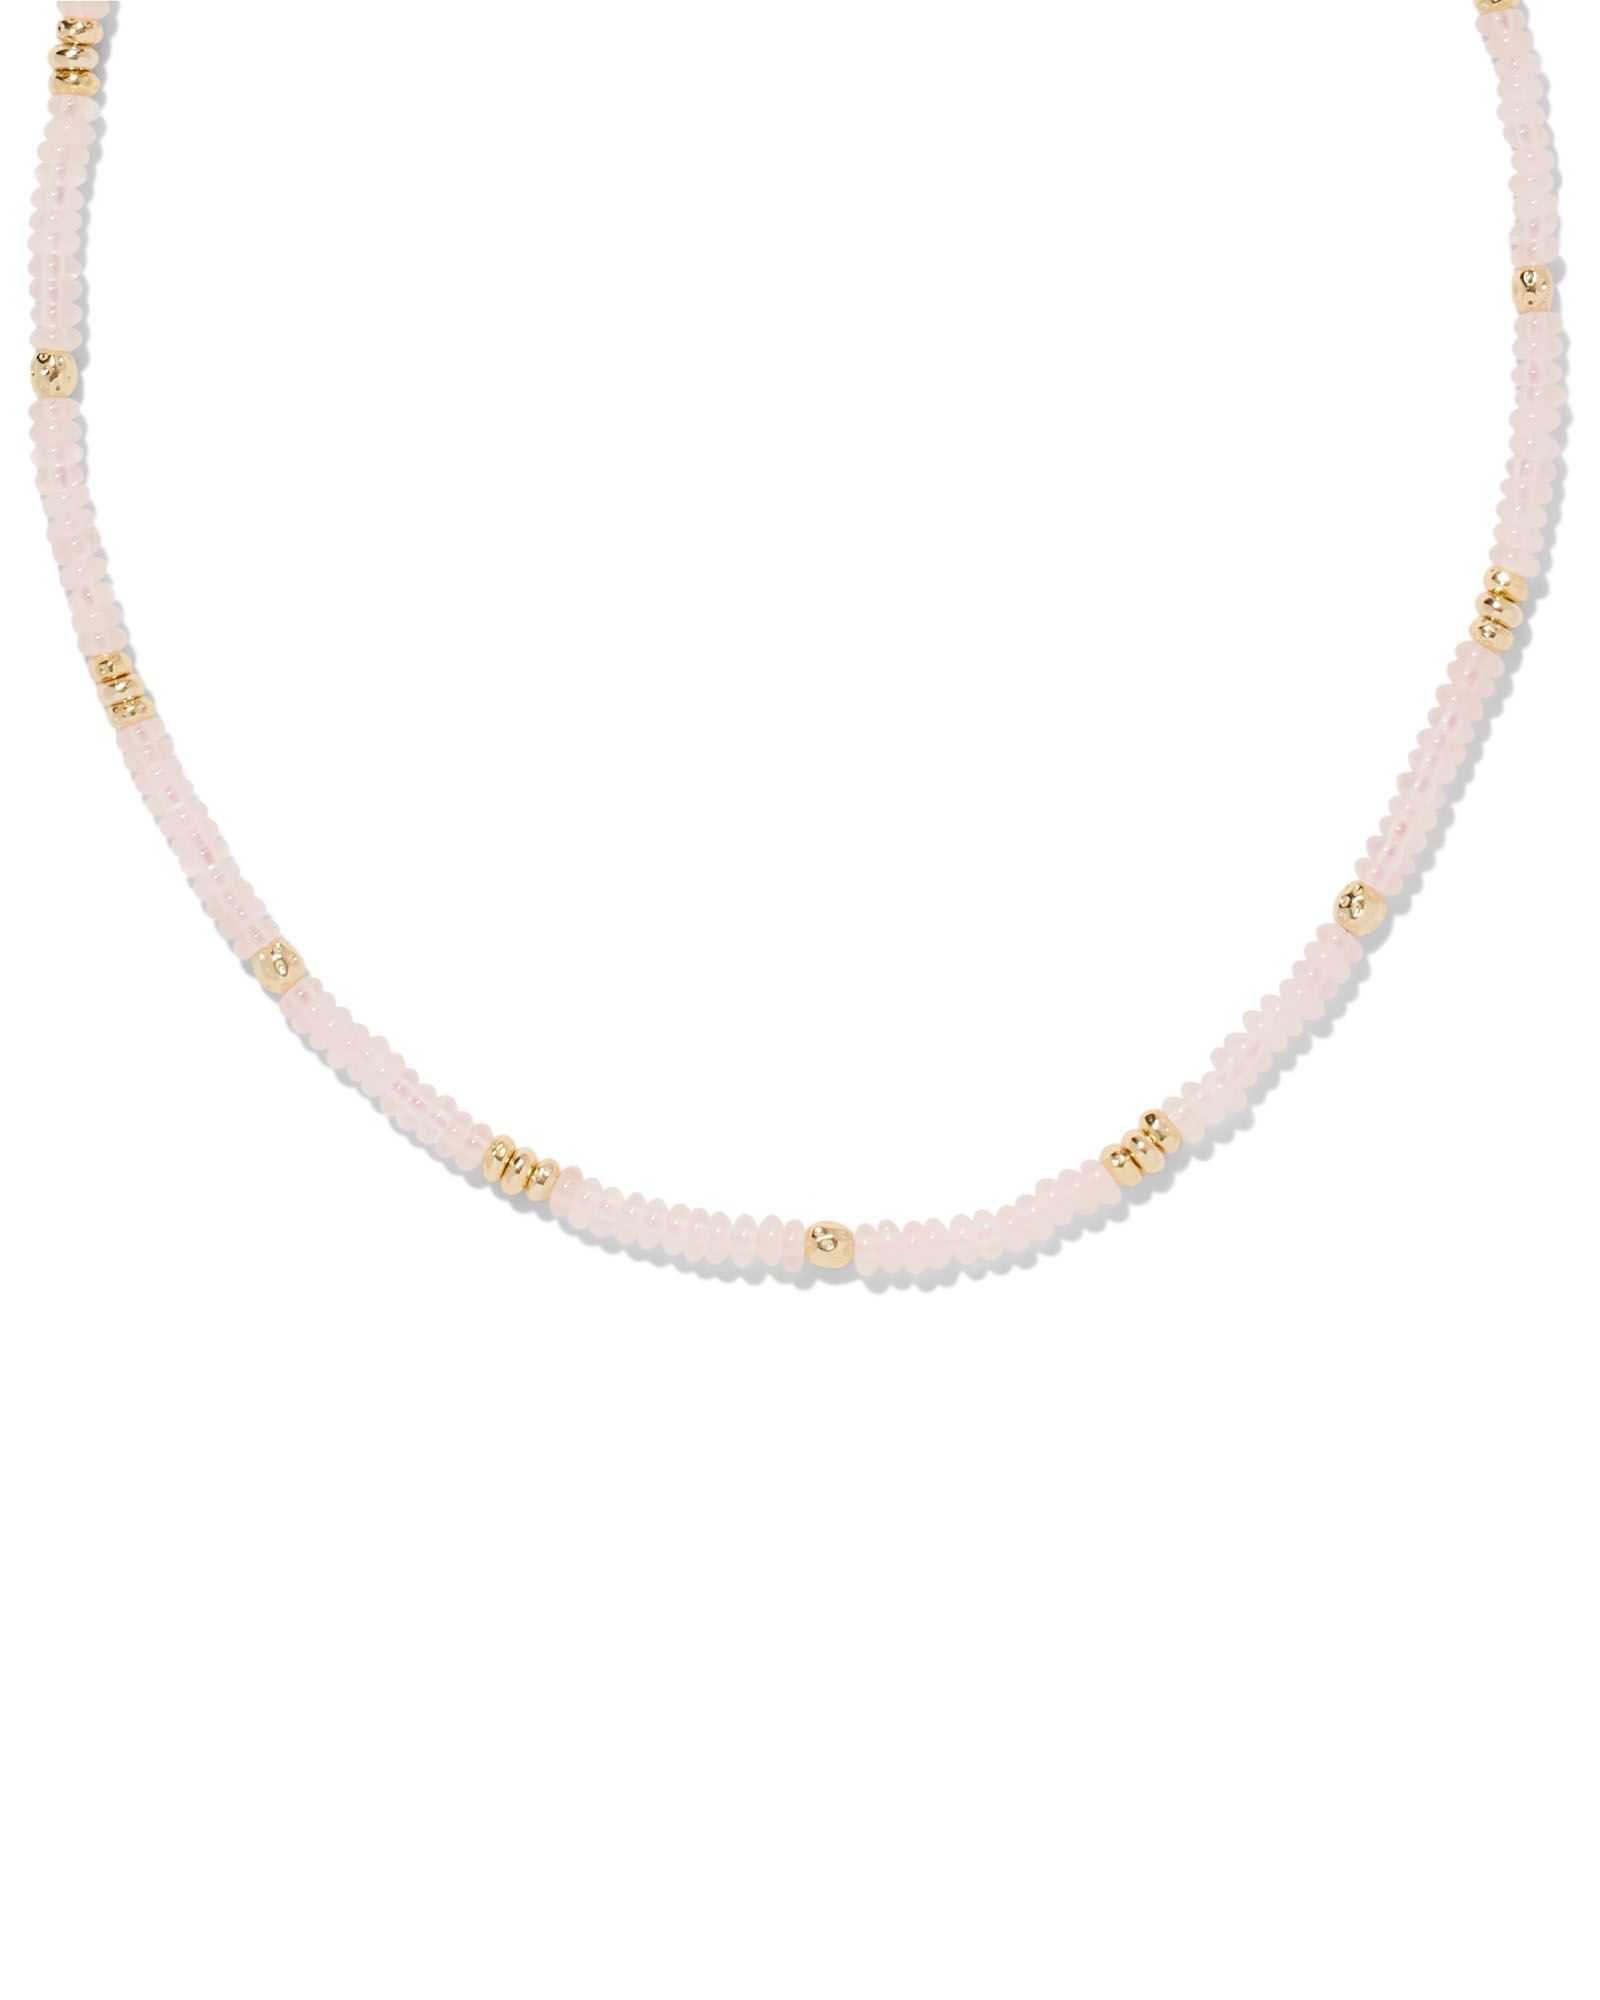 Deliah Gold Strand Necklace in Rose Quartz | Kendra Scott